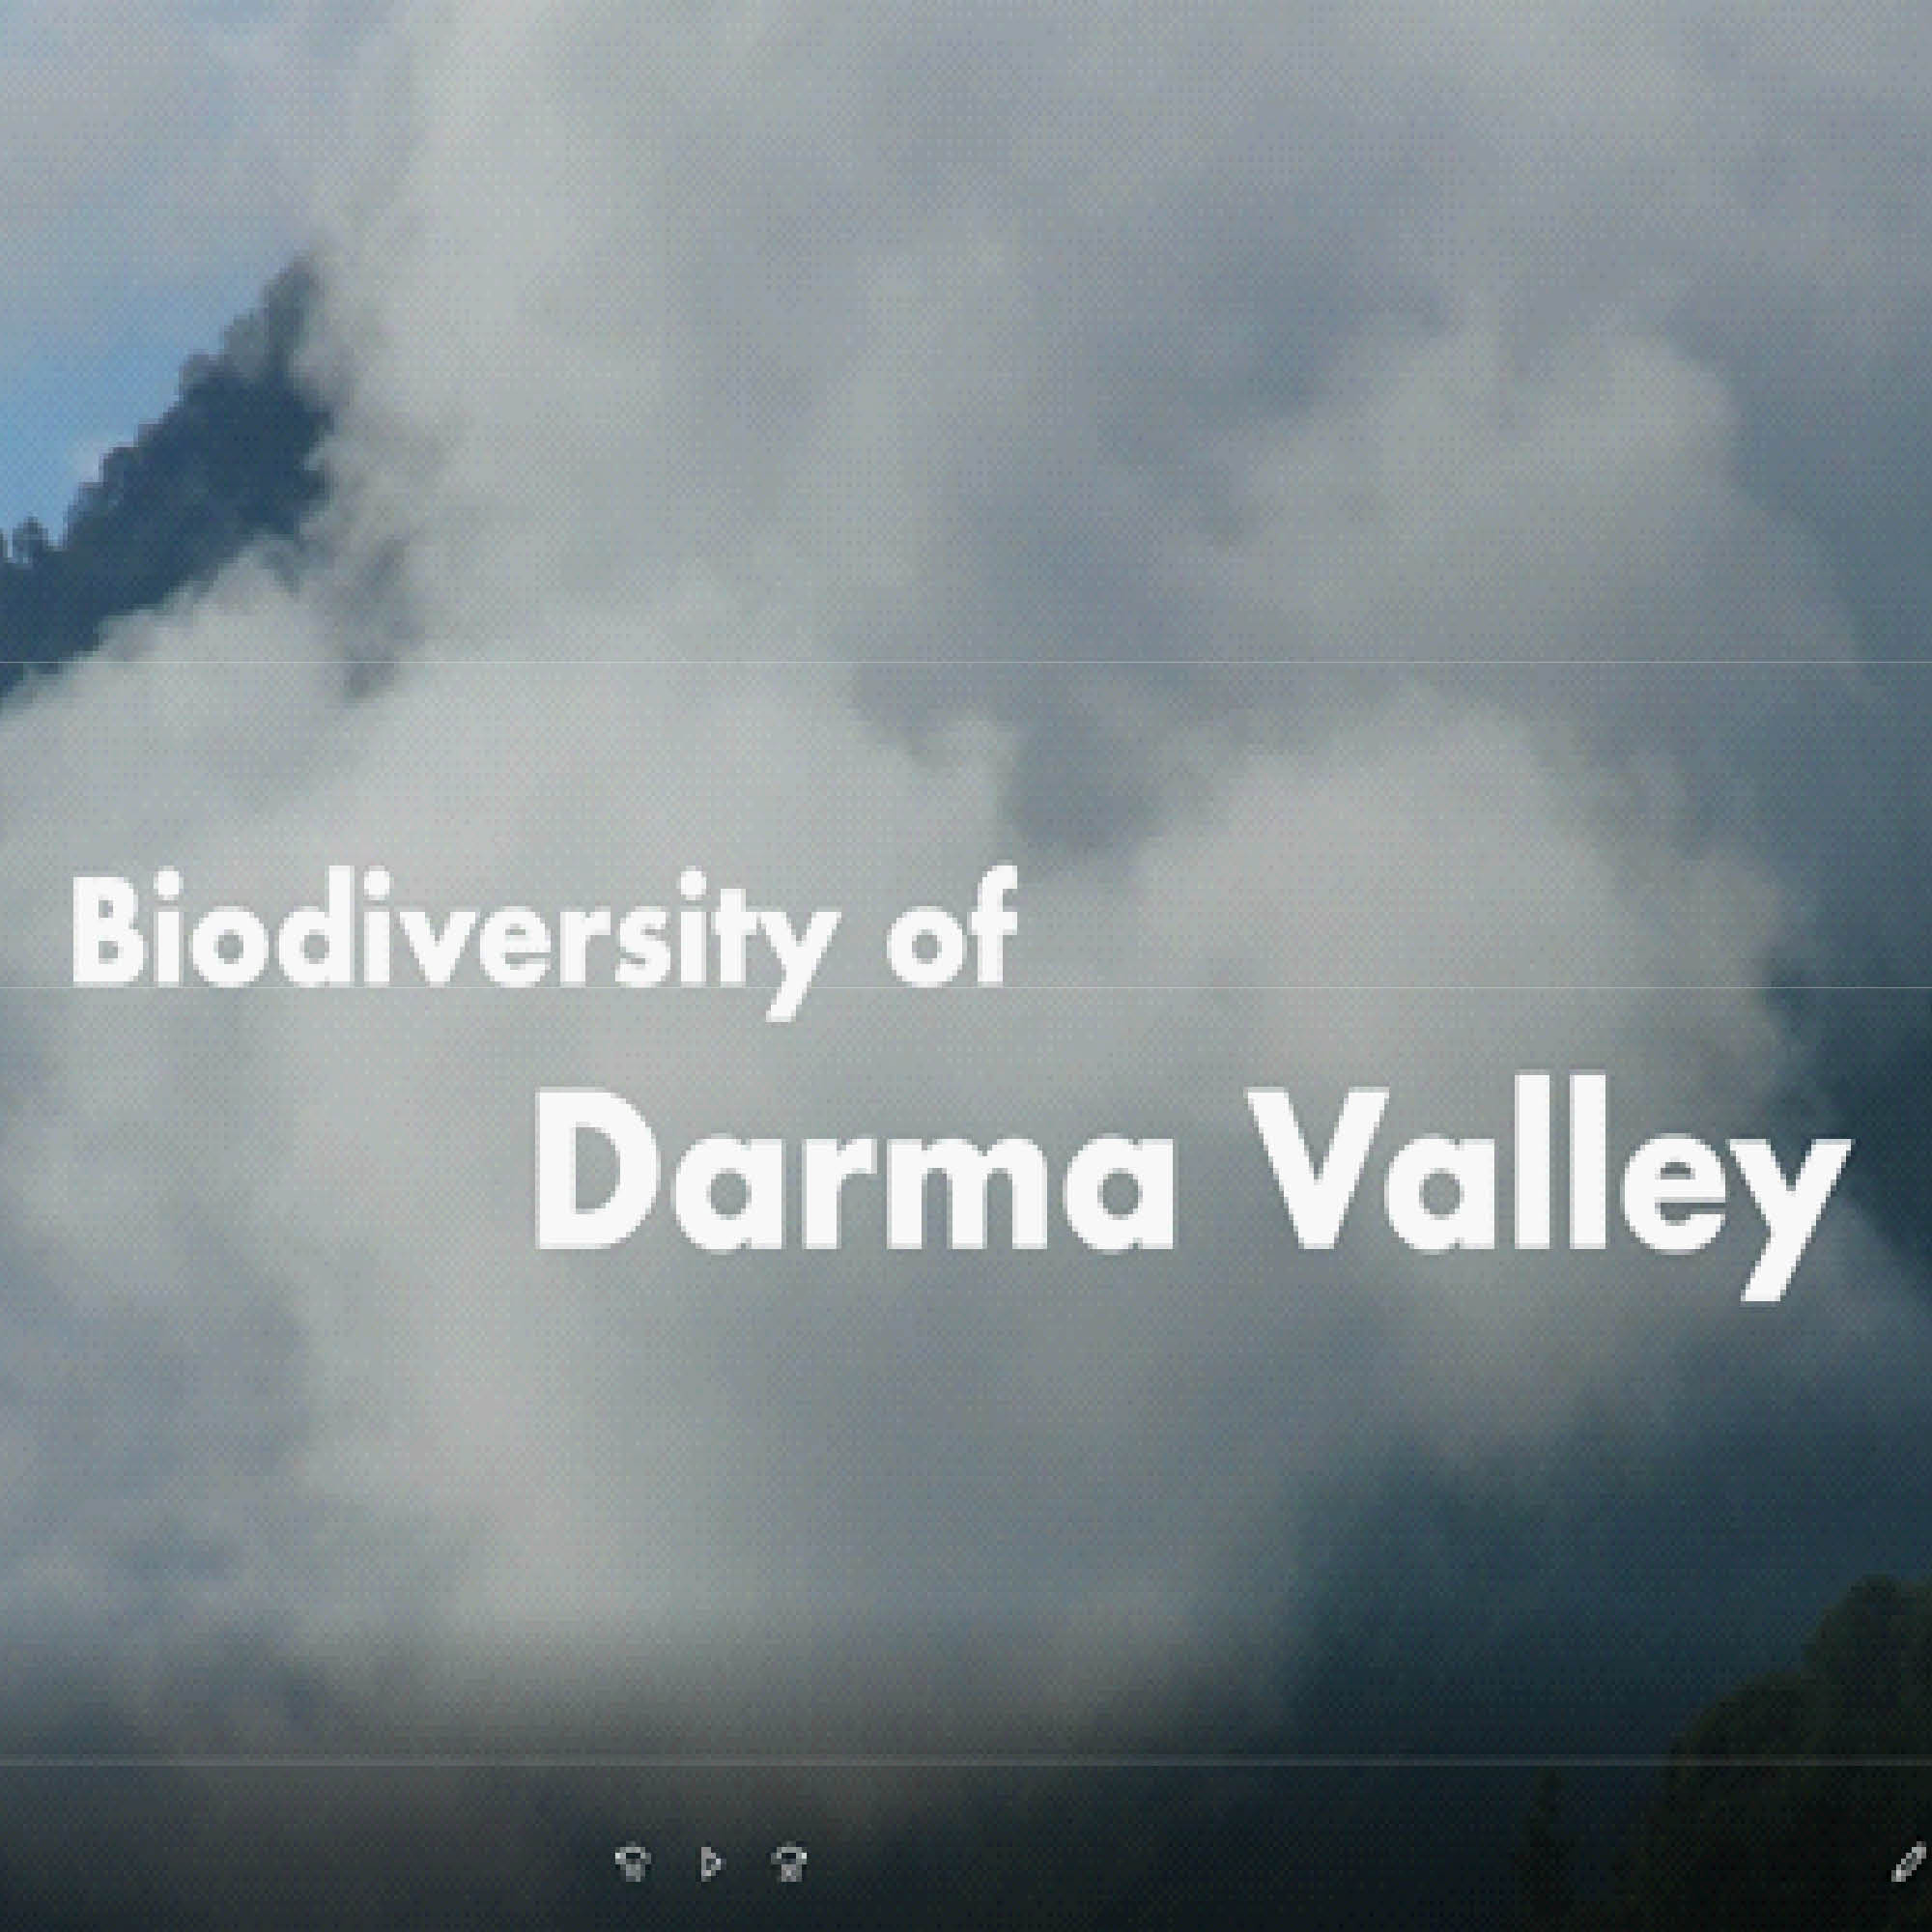 Biodiversity of Darma Valley